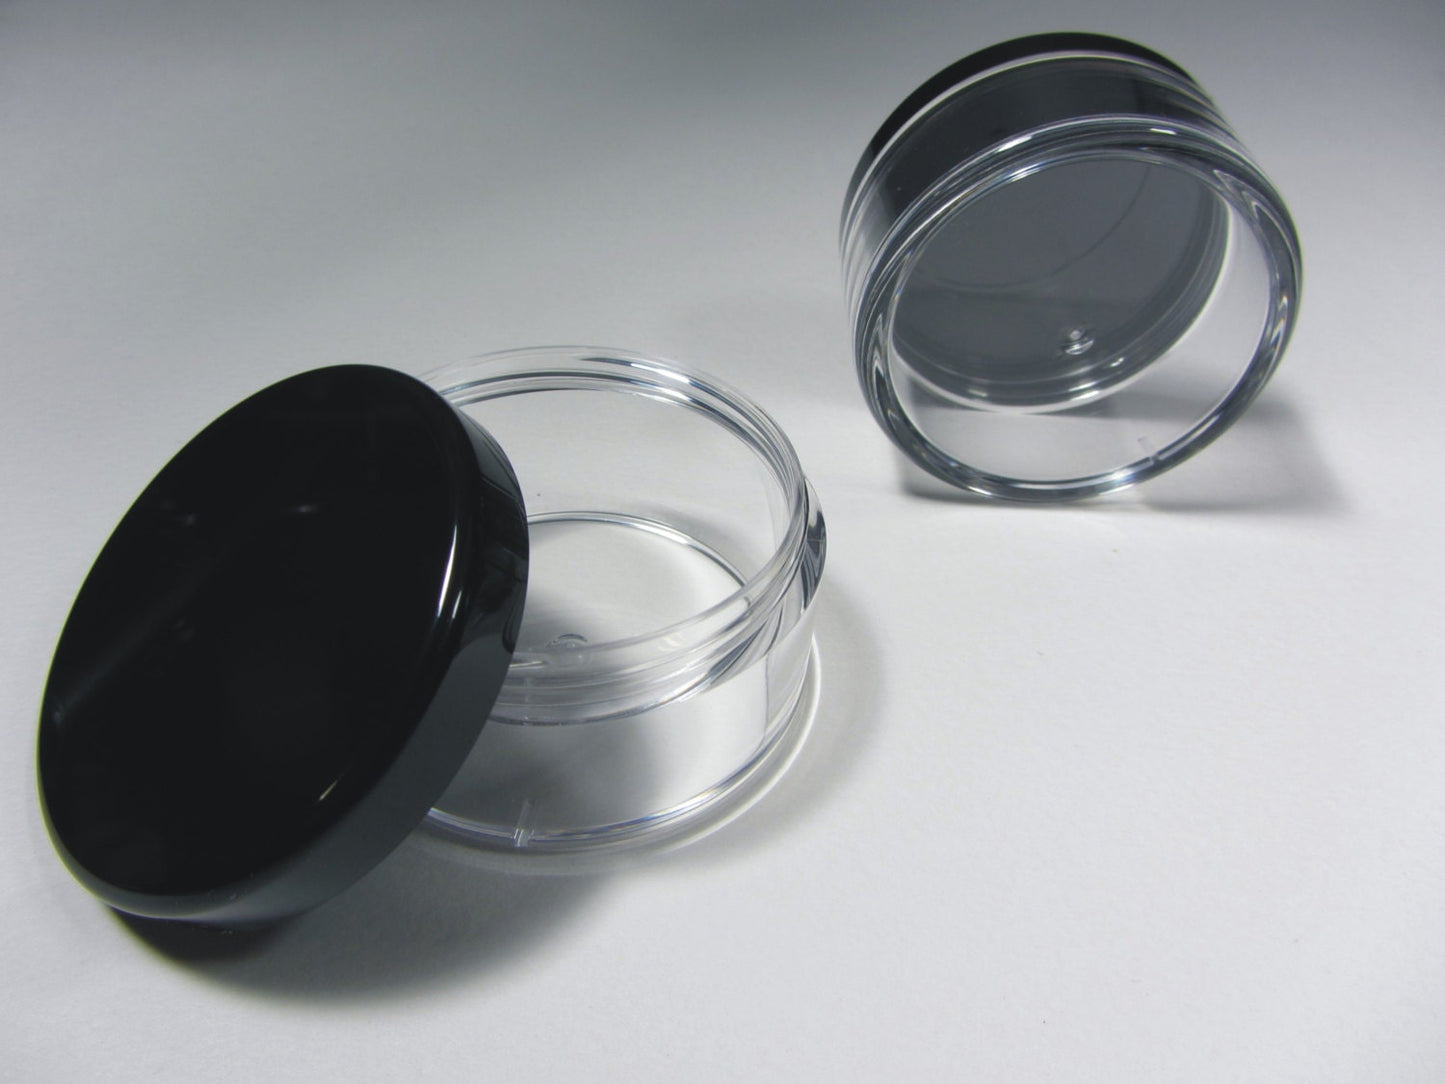 50 Cosmetic Jars Beauty Makeup Supply Loose Powder Containers DIY Packaging Black Lid 30 Gram 30 Ml (3063-50) Discount Cosmetic Jars